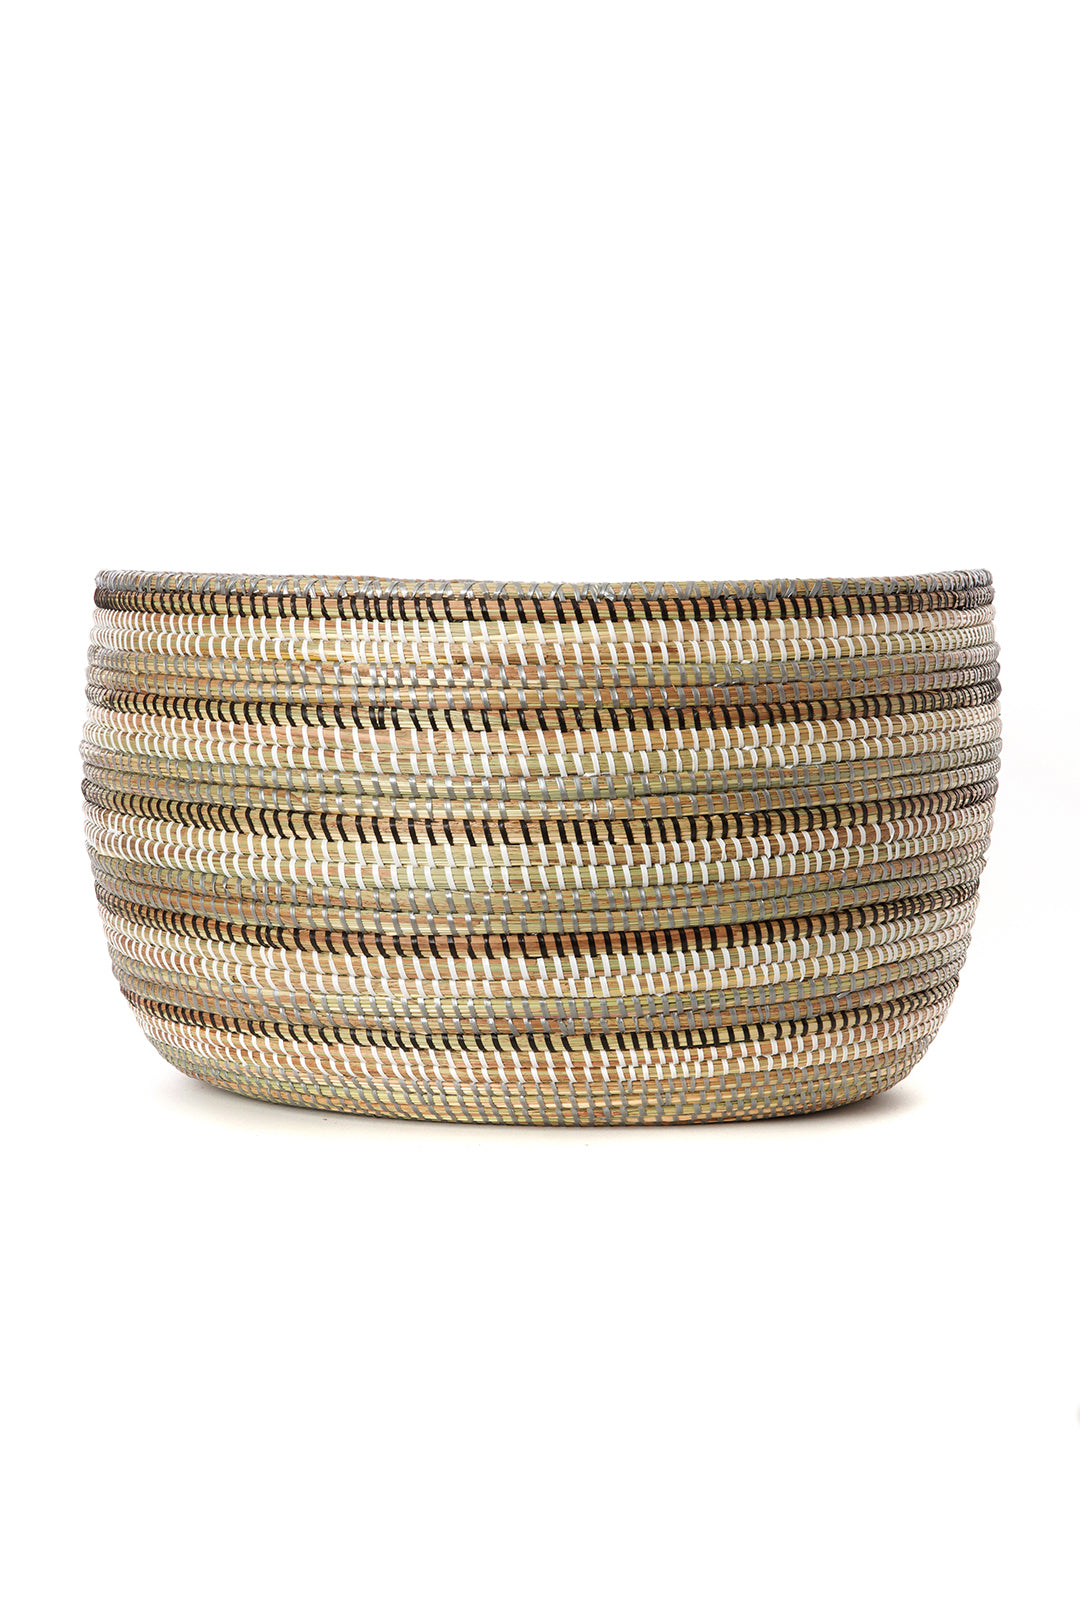 Silver Striped Knitting Basket Default Title